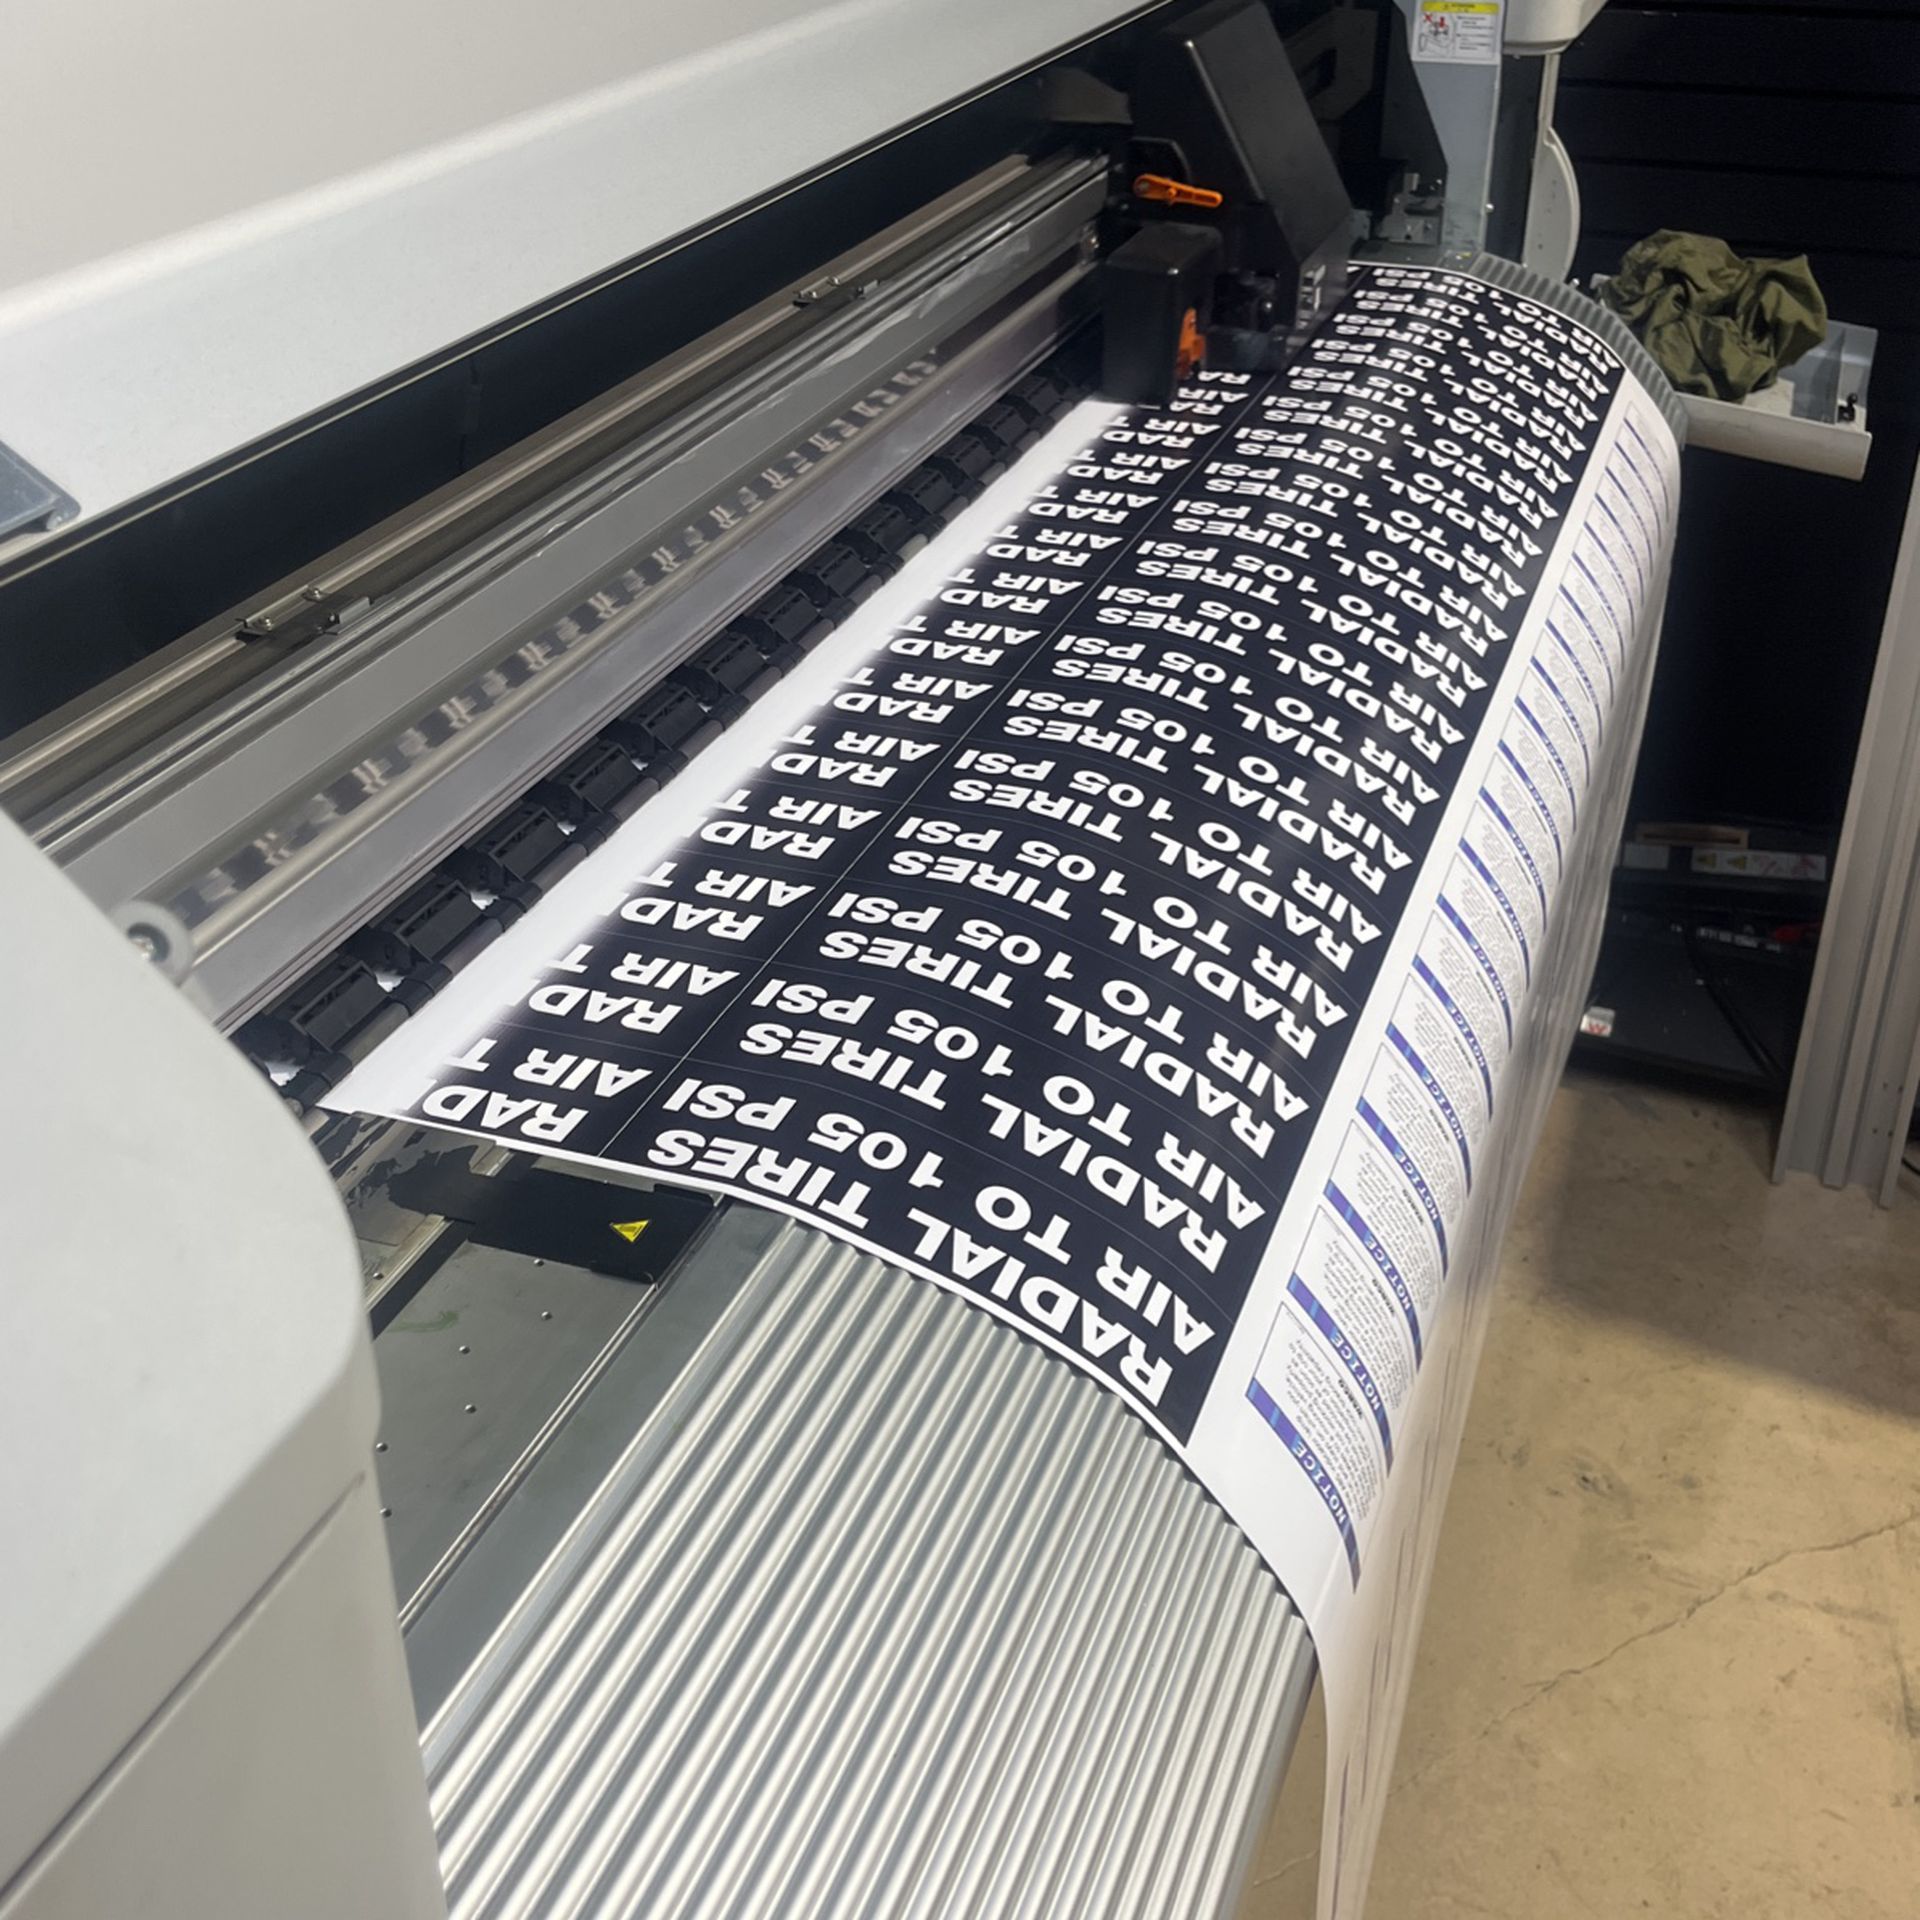 Printing 